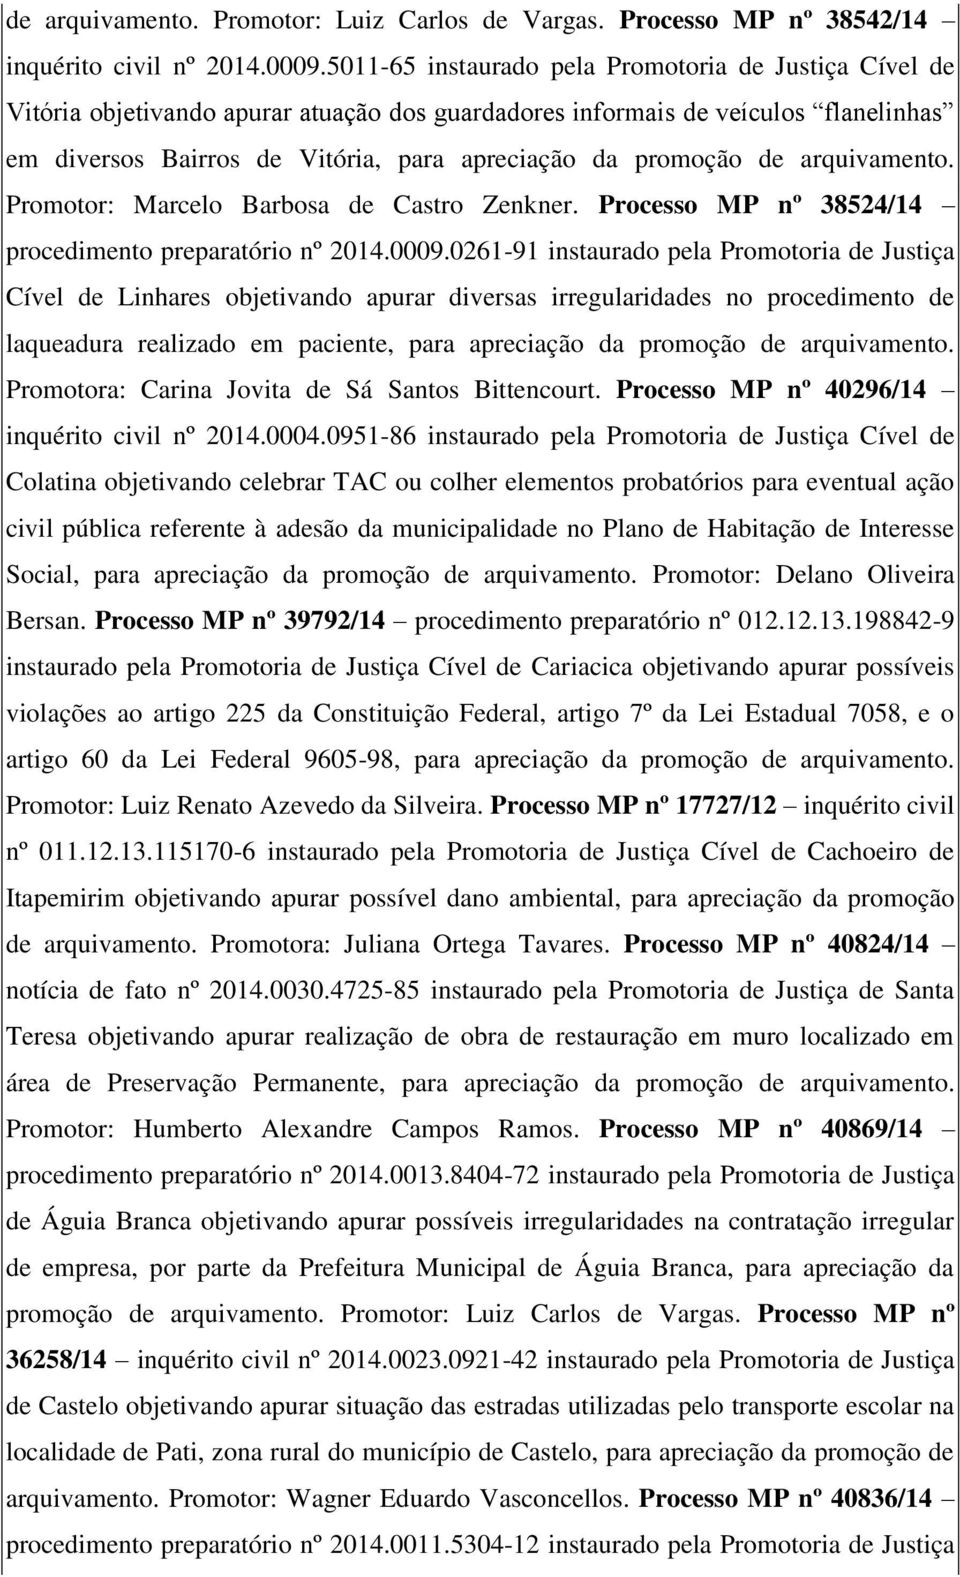 de arquivamento. Promotor: Marcelo Barbosa de Castro Zenkner. Processo MP nº 38524/14 procedimento preparatório nº 2014.0009.